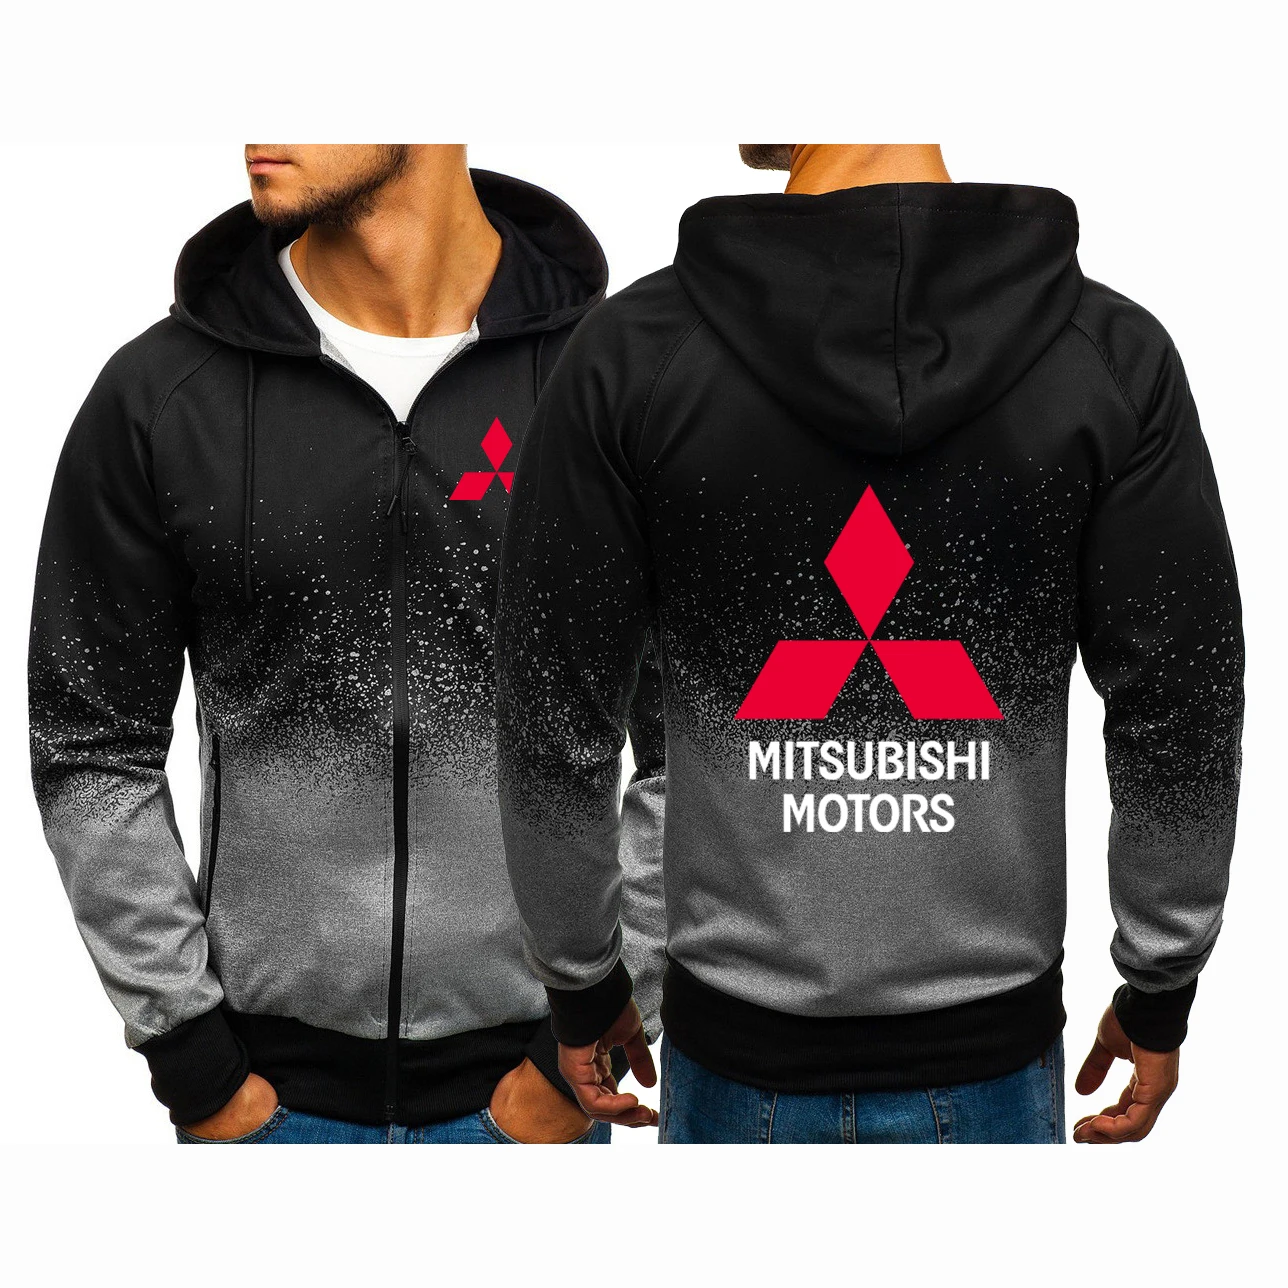 

2022 Spring Gradient Color Sweatshirts Mitsubishi Motors Printing Commission Male Fashion Cotton Hoodies Sport zipper Jackets